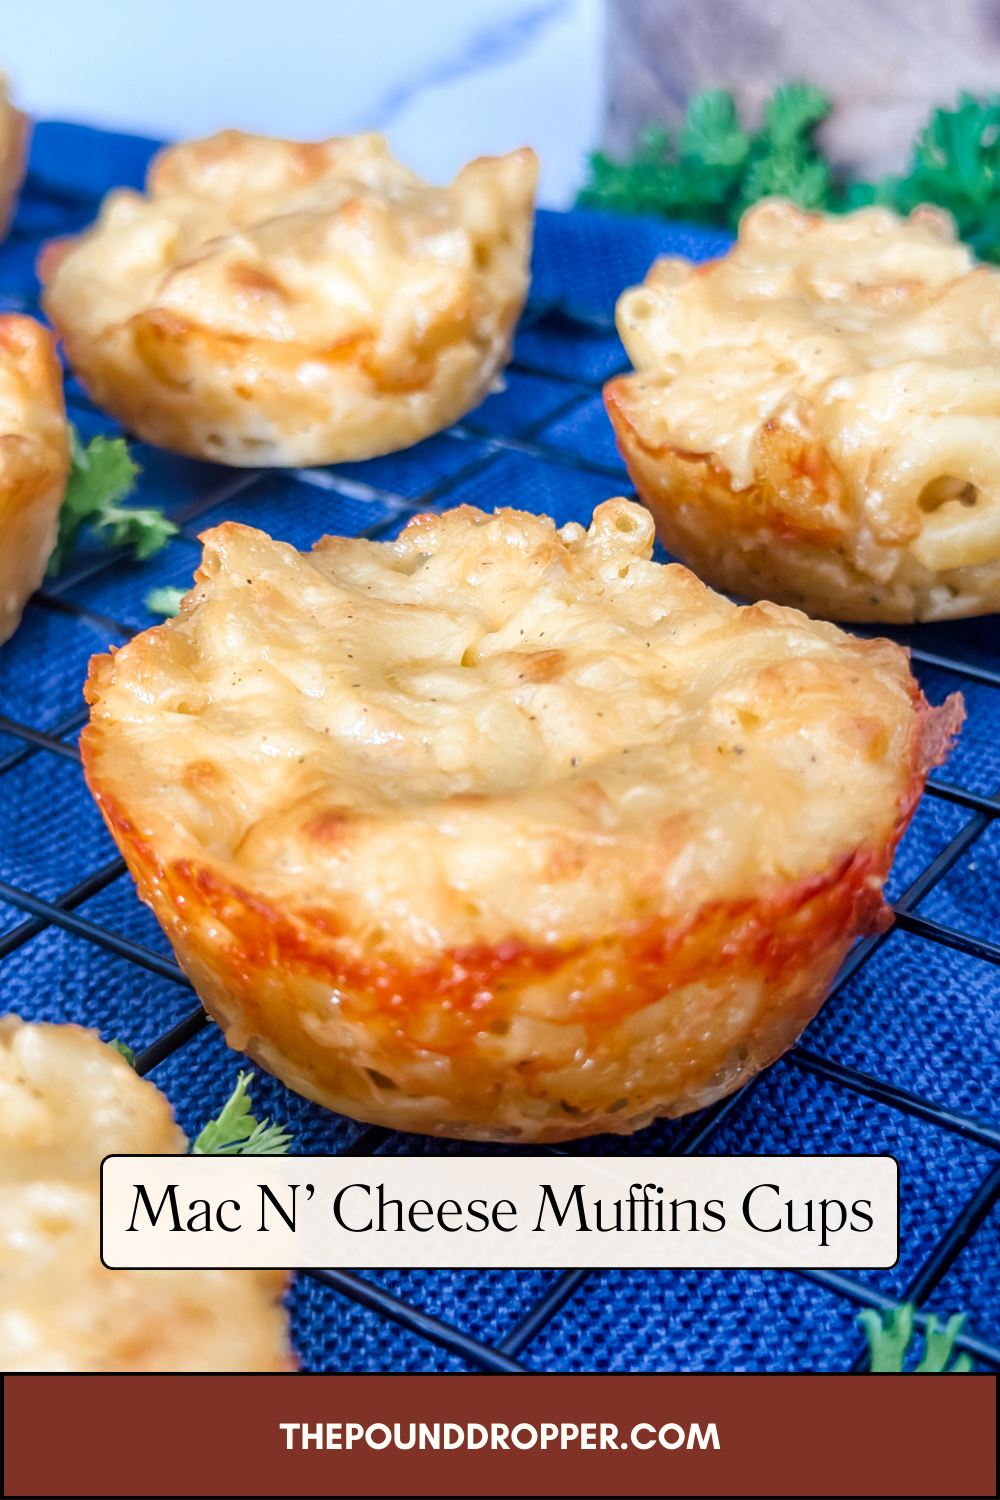 Mac N’ Cheese Muffin Cups via @pounddropper